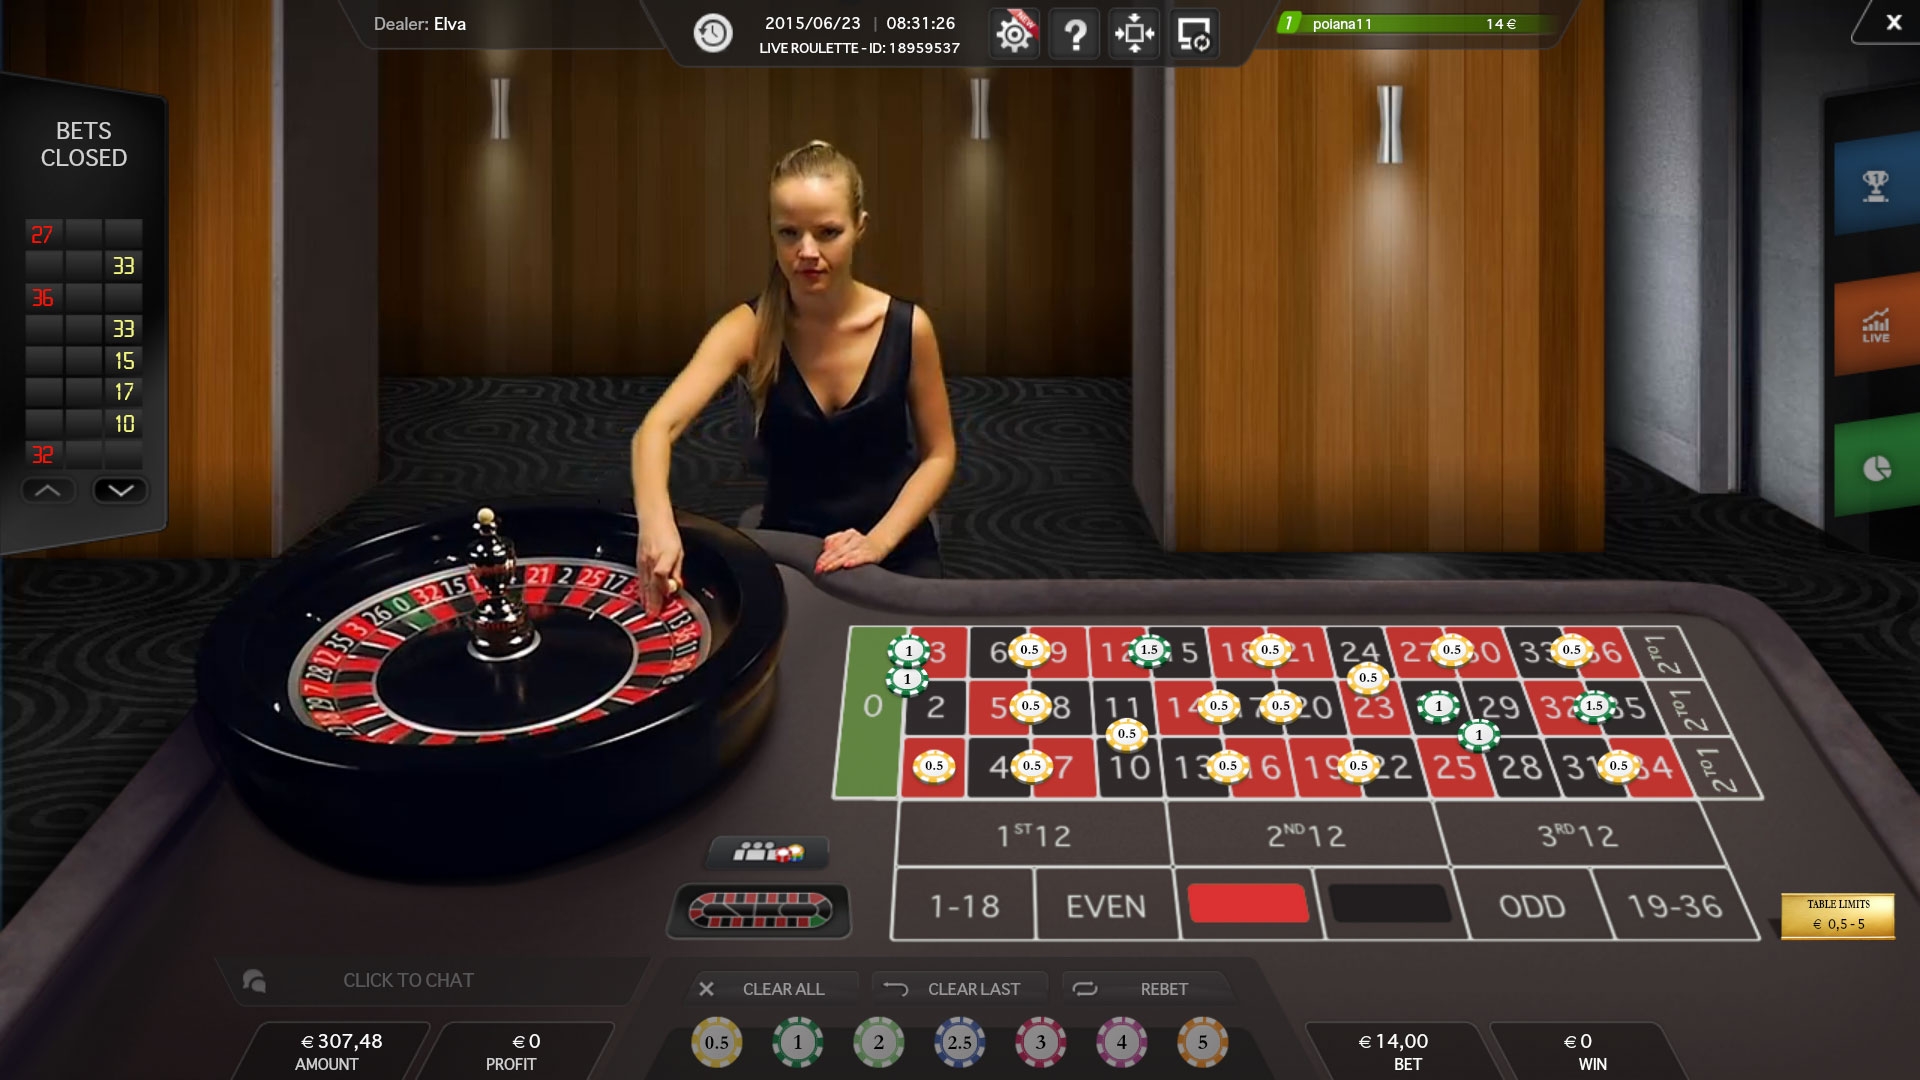 Live roulette online casino phpbb зеркало мостбет актуальное сегодня mostbet ww6 xyz